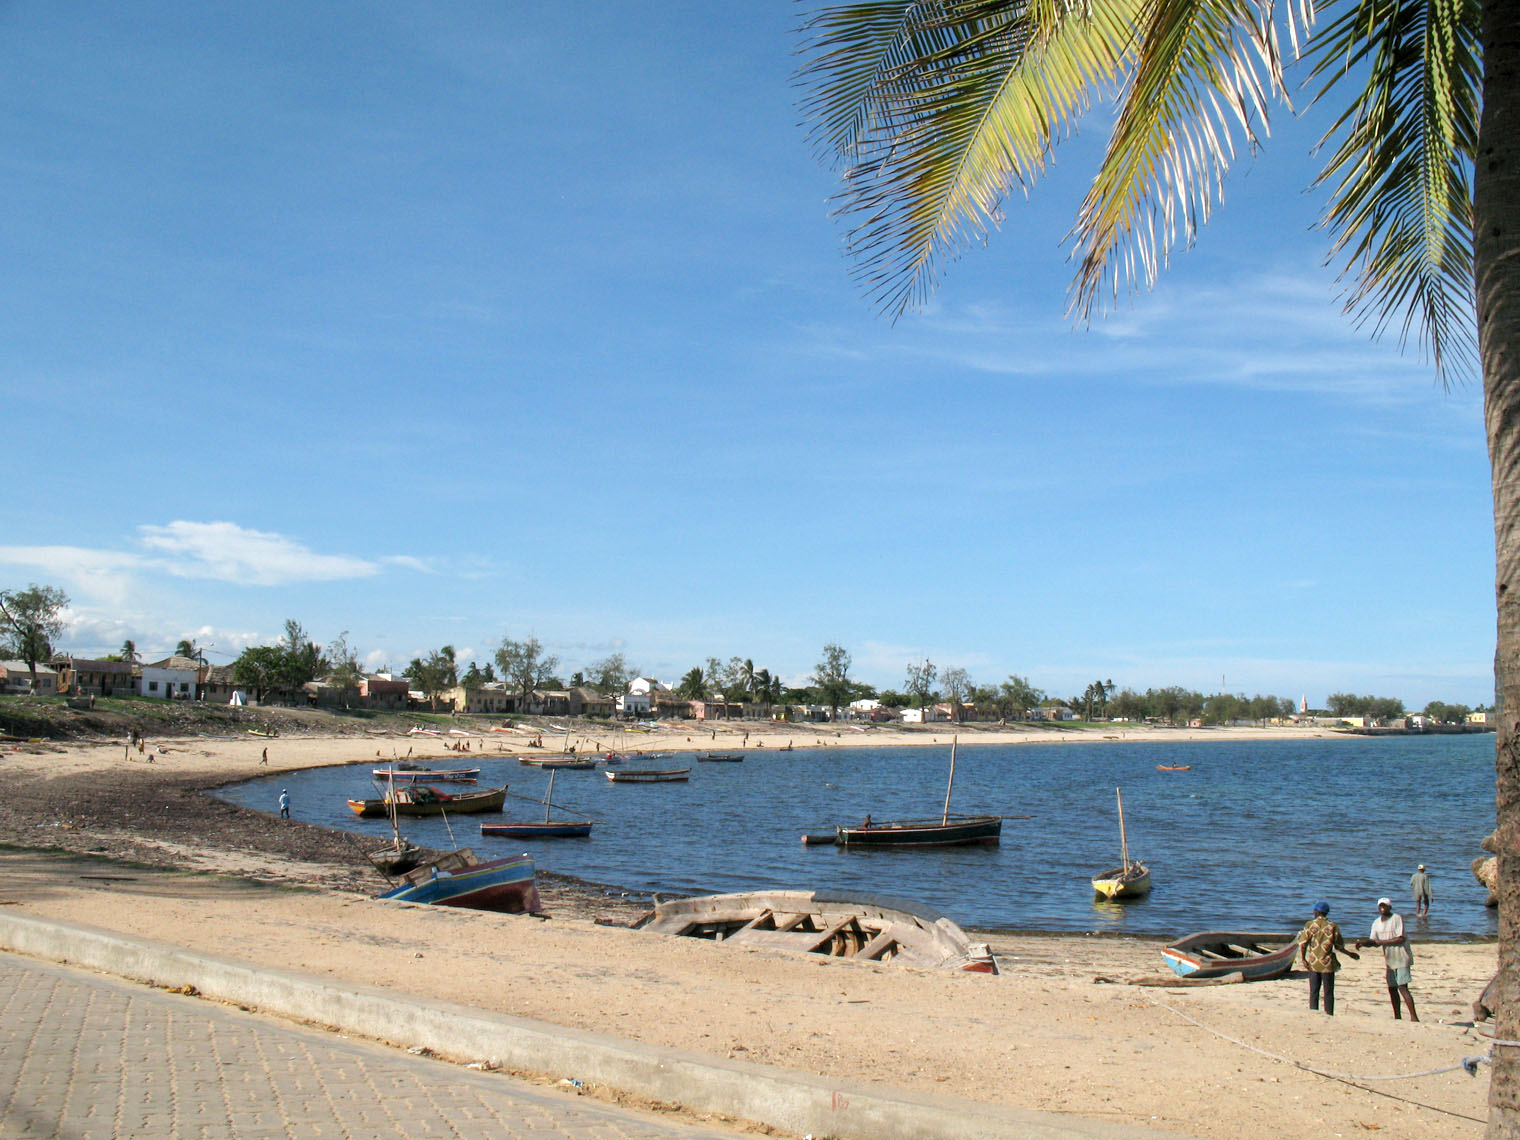 Foto av Mozambique island Beach med rymlig strand